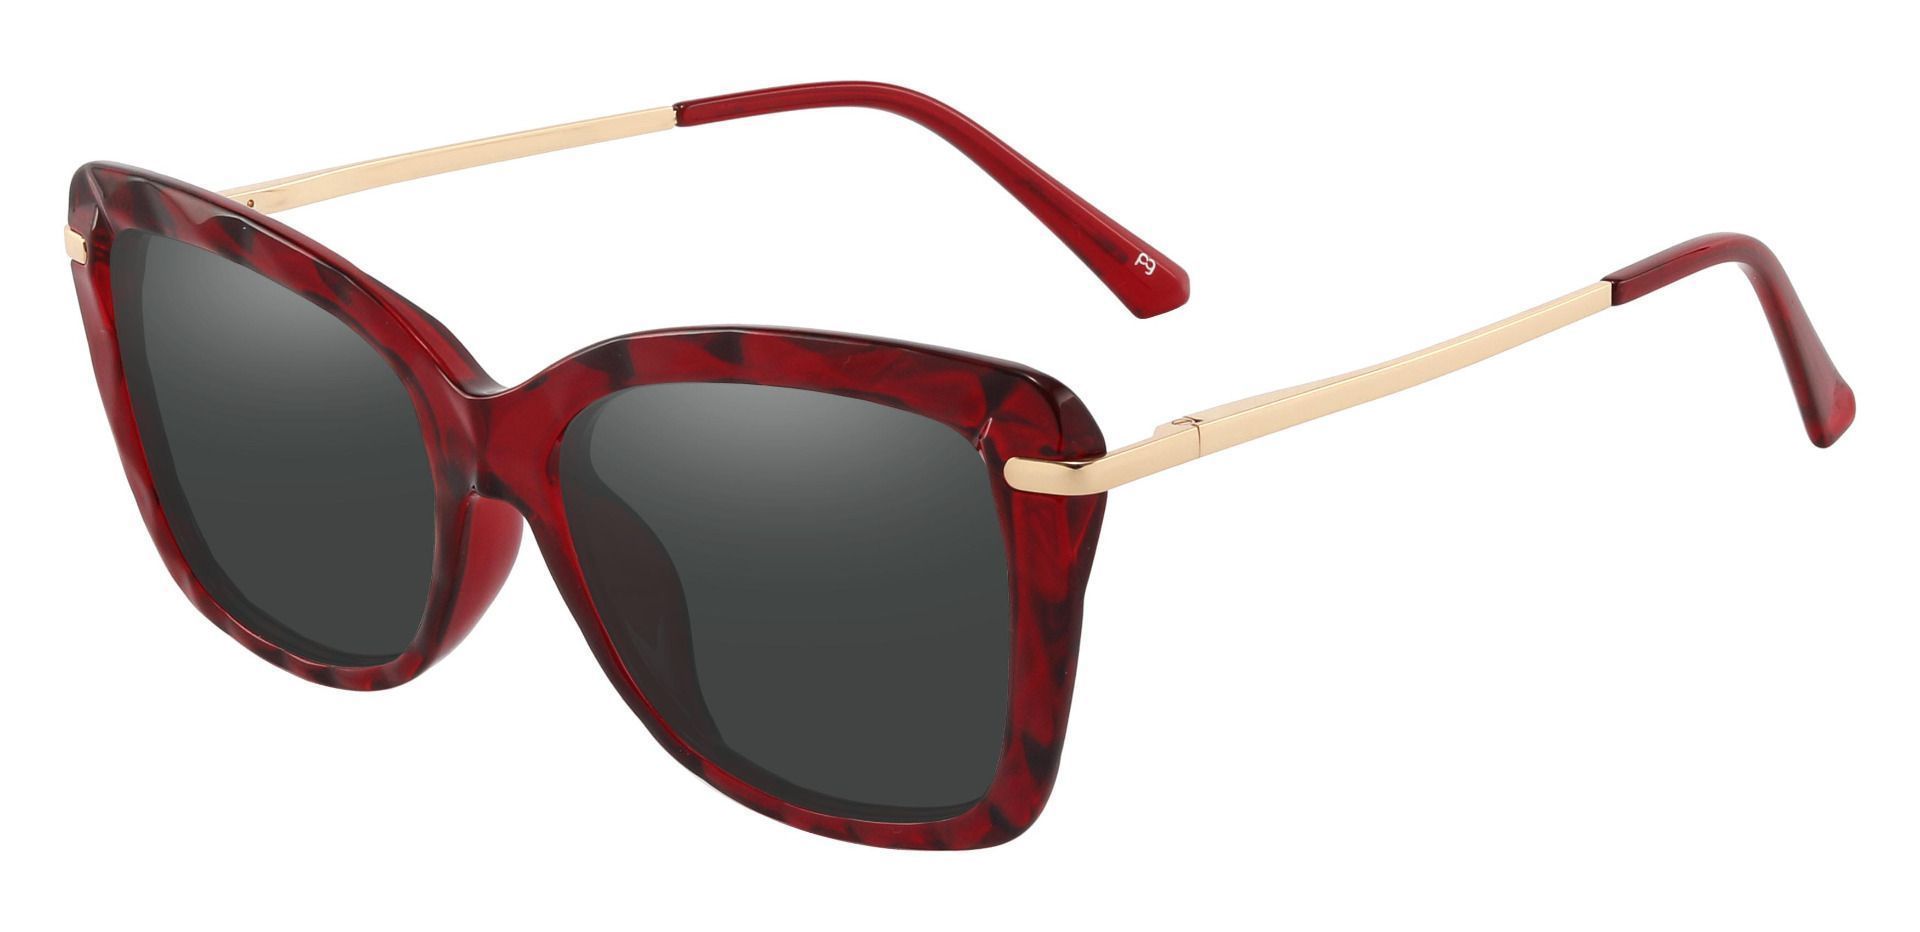 Shoshanna Rectangle Prescription Sunglasses - Red Frame With Gray Lenses